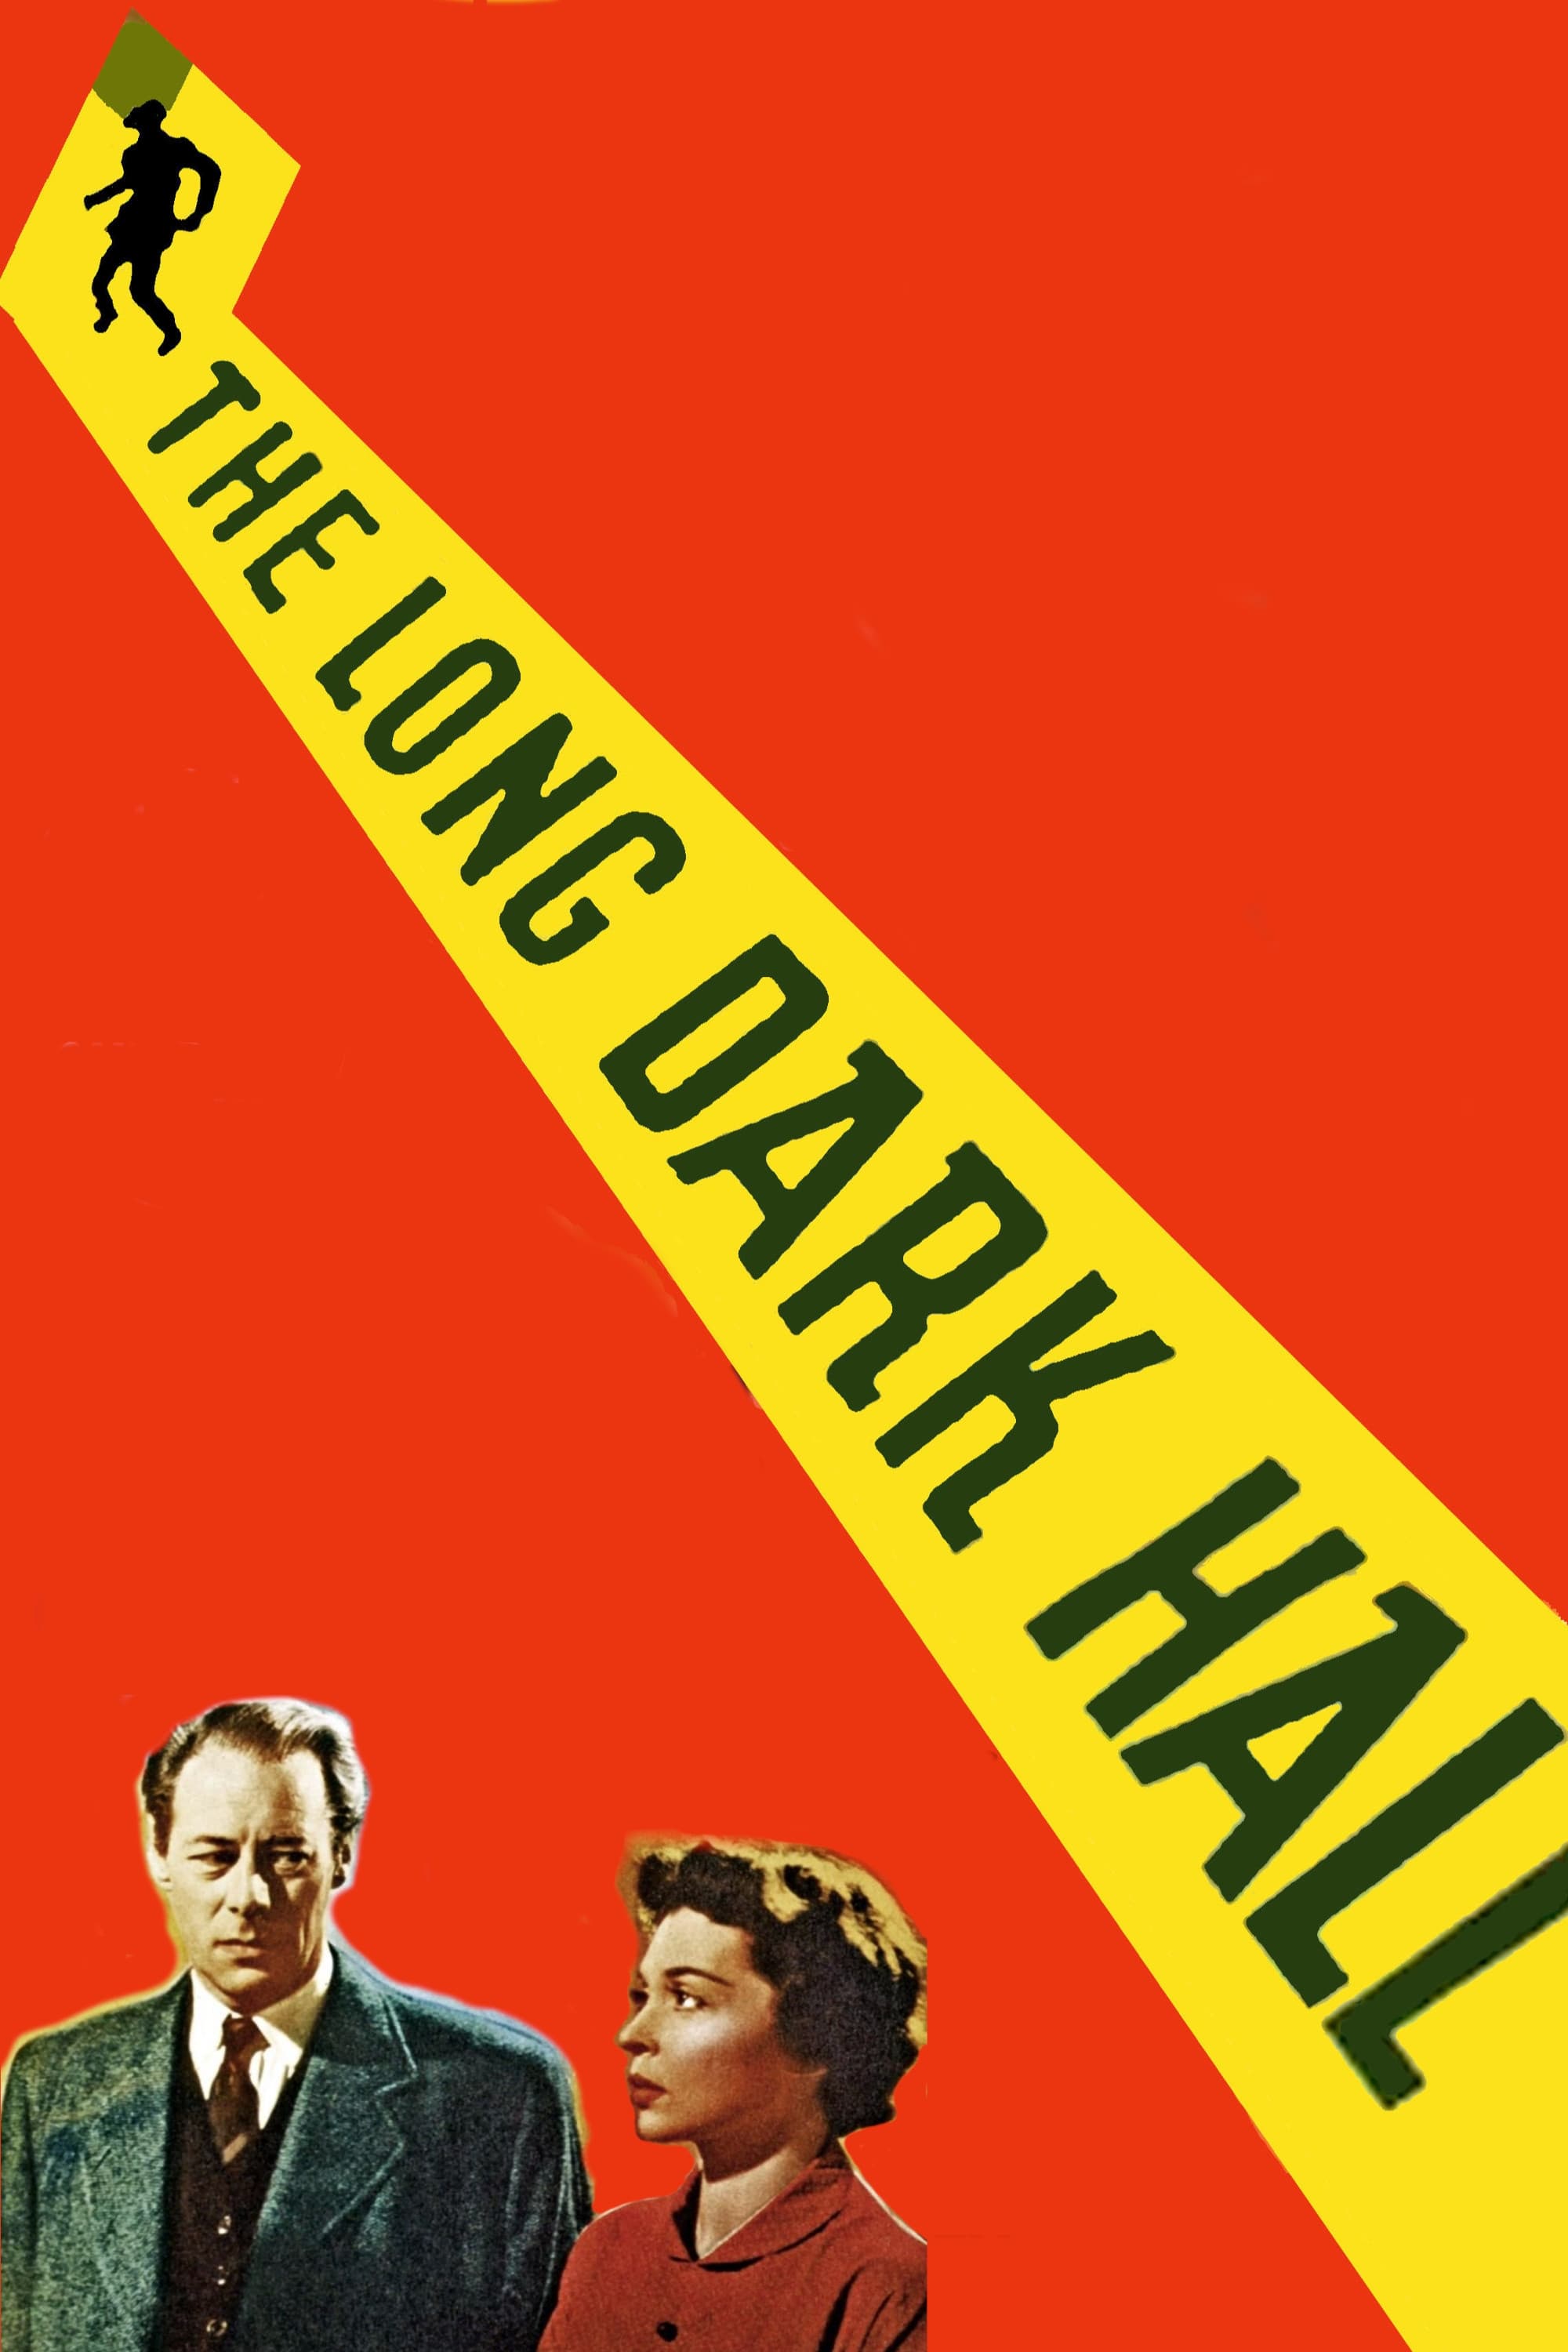 The Long Dark Hall (1951)